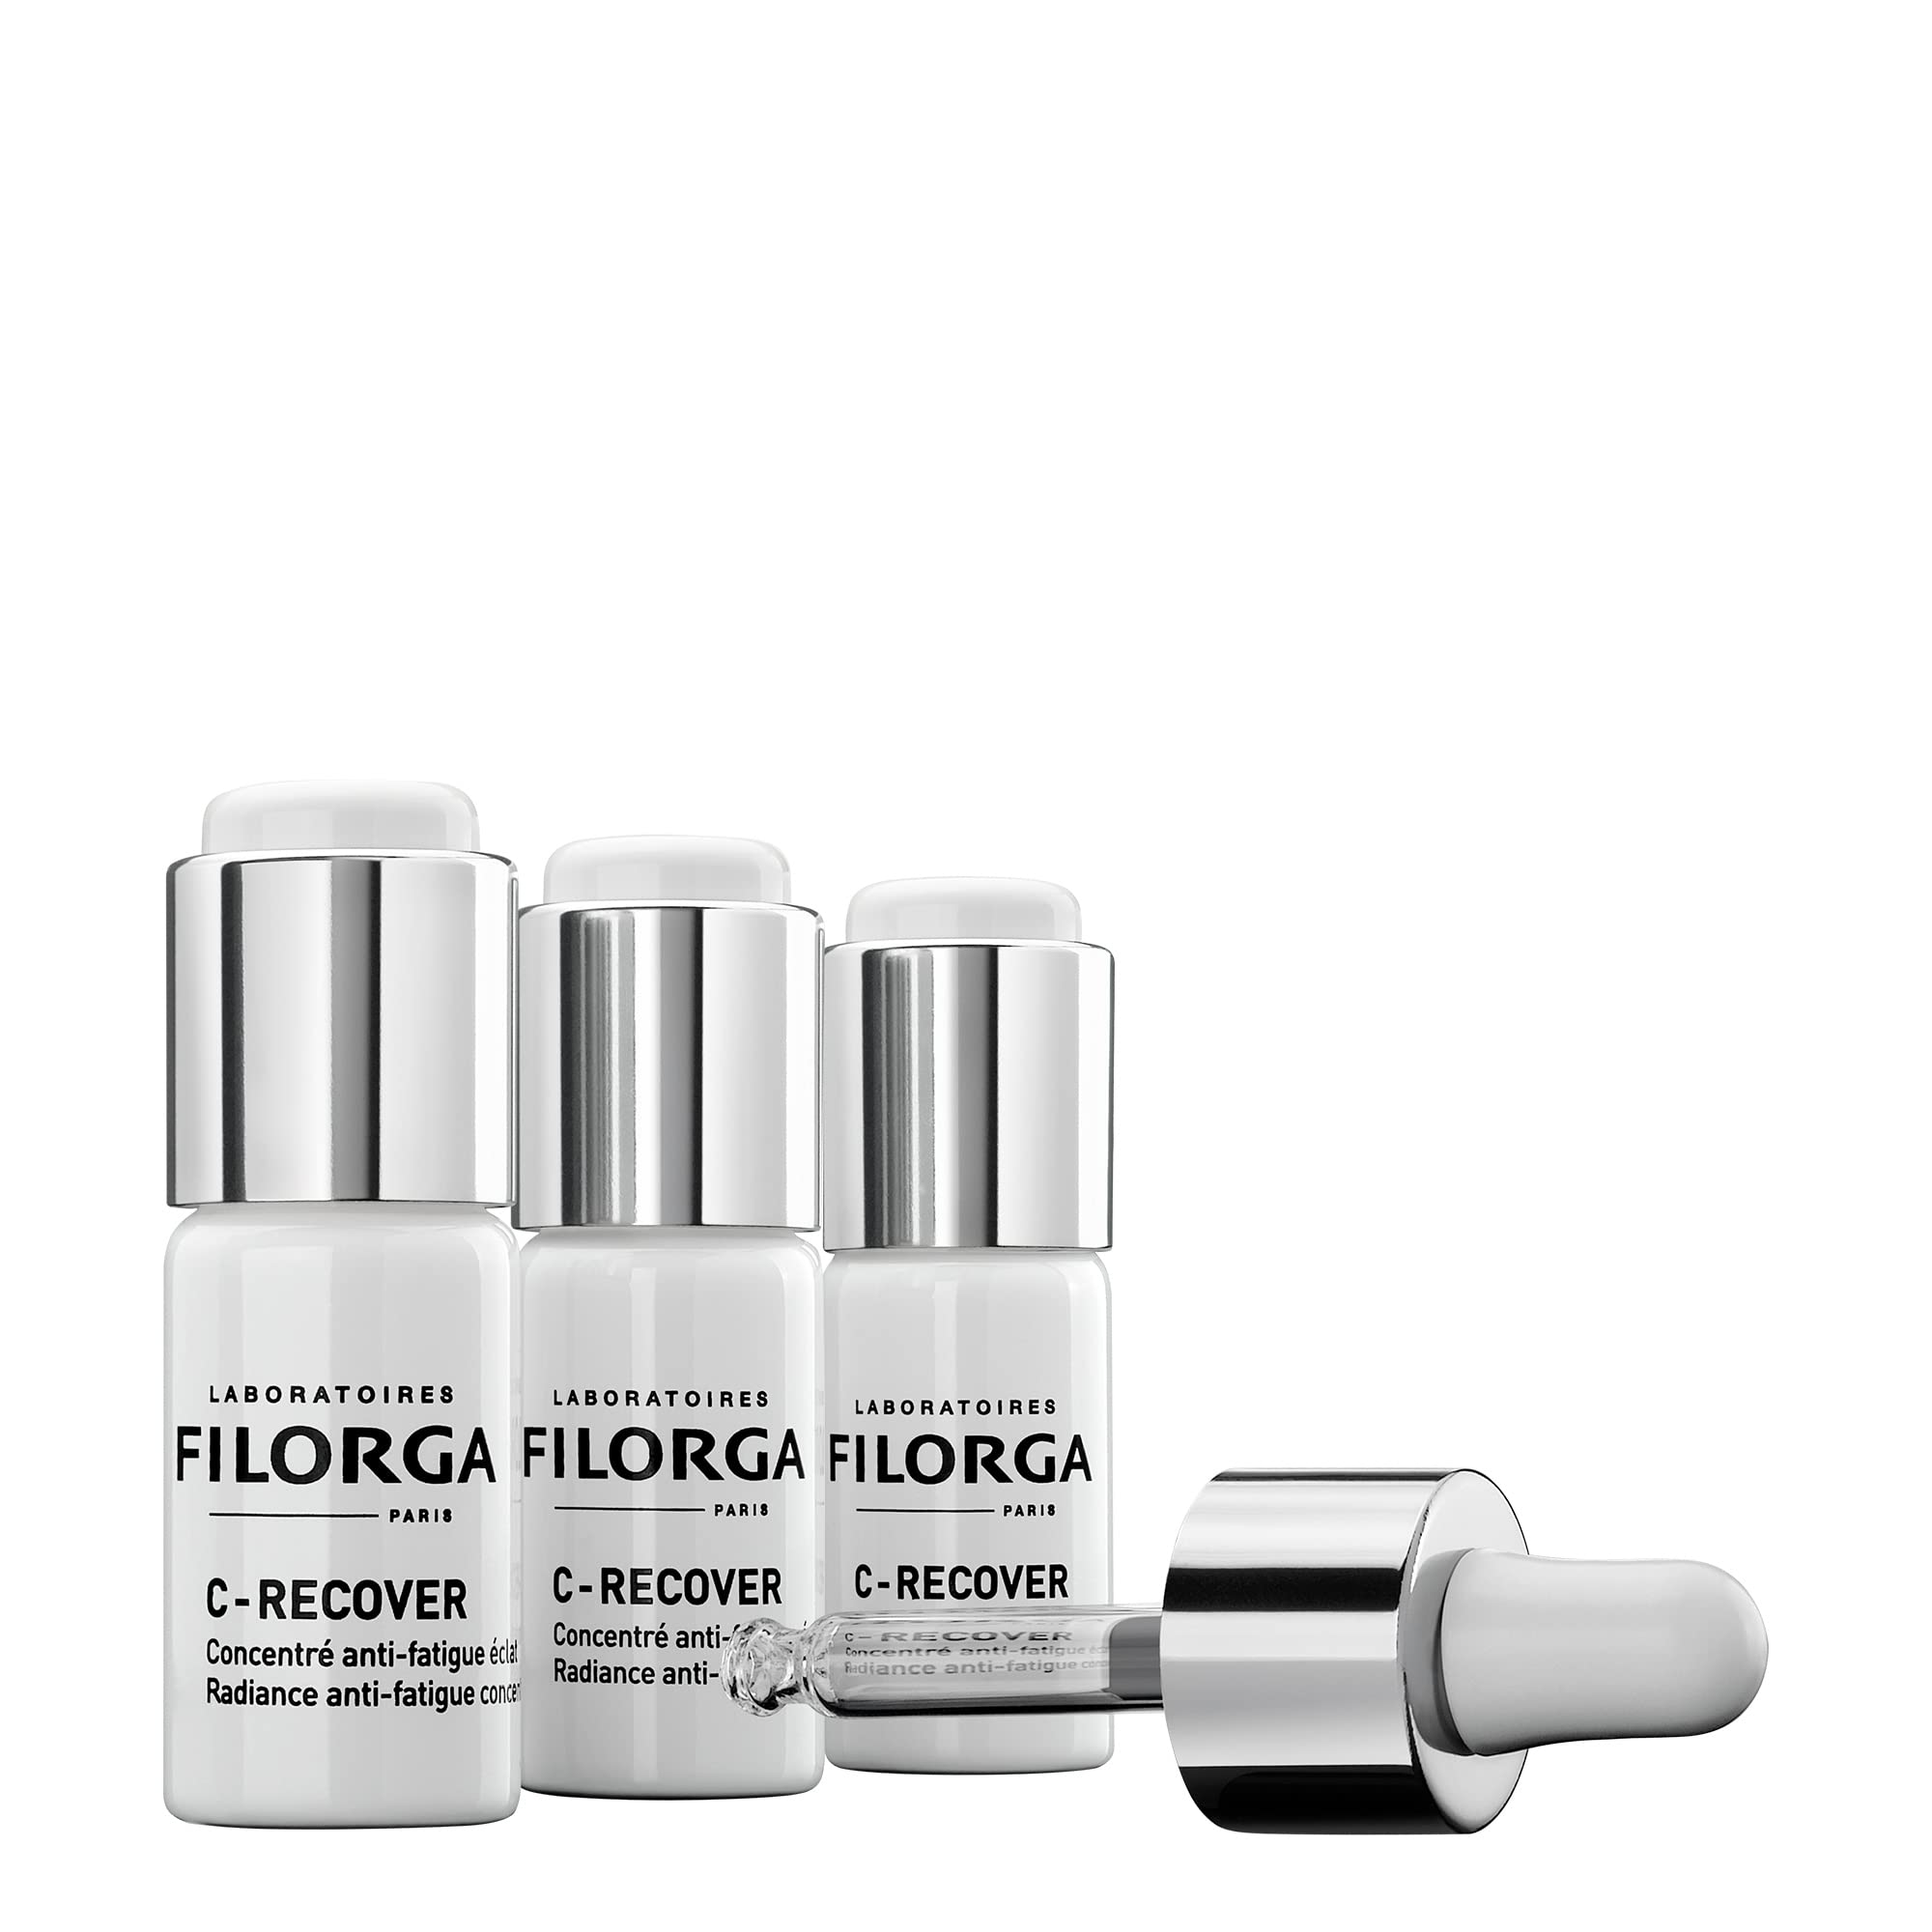 Filorga C-Recover femme/women, Anti-Fatique Radiance Concentrate (3 Flacons), 1er Pack (1 x 30 g)